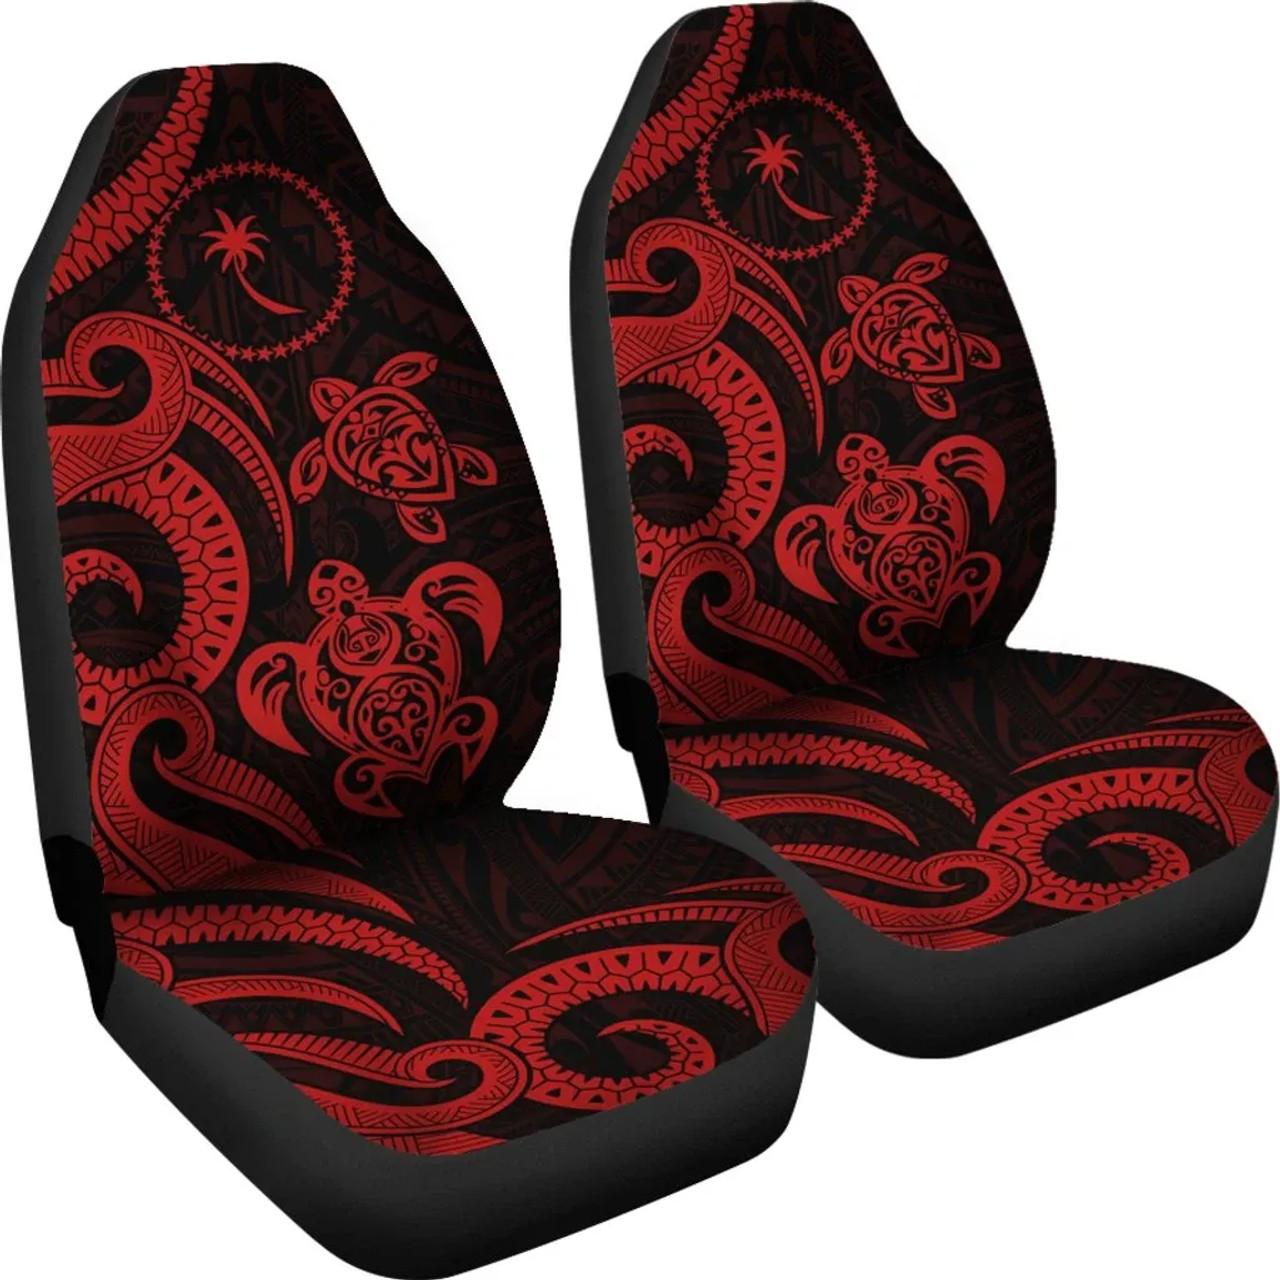 Chuuk Micronesian Car Seat Covers - Red Tentacle Turtle